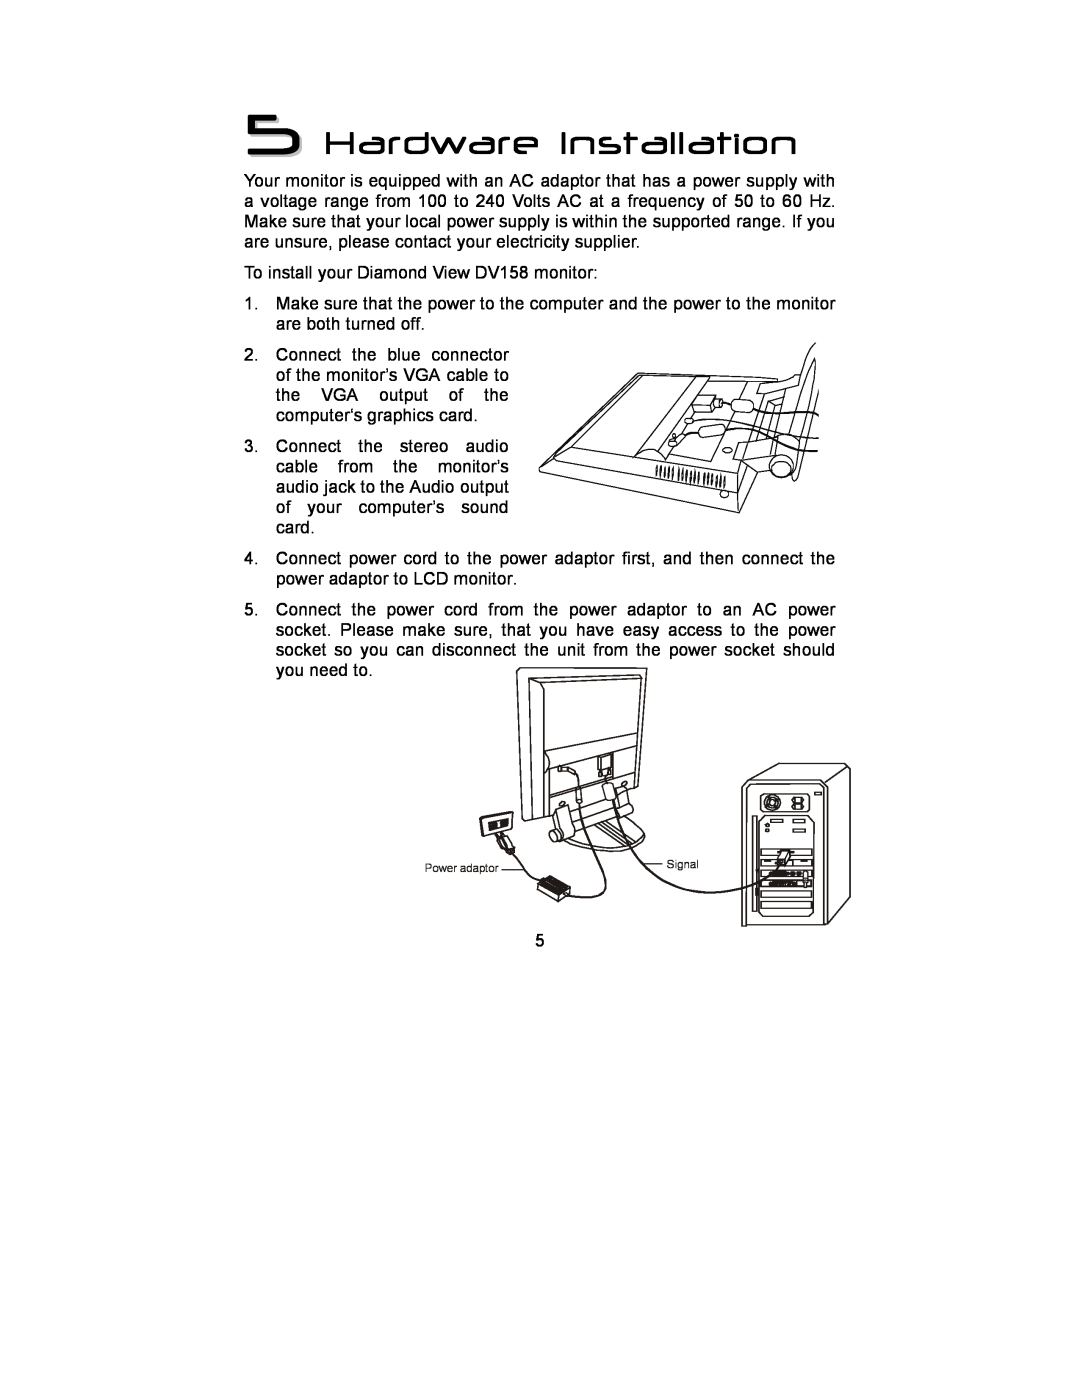 Mitsubishi Electronics DV158 manual Hardware Installation 